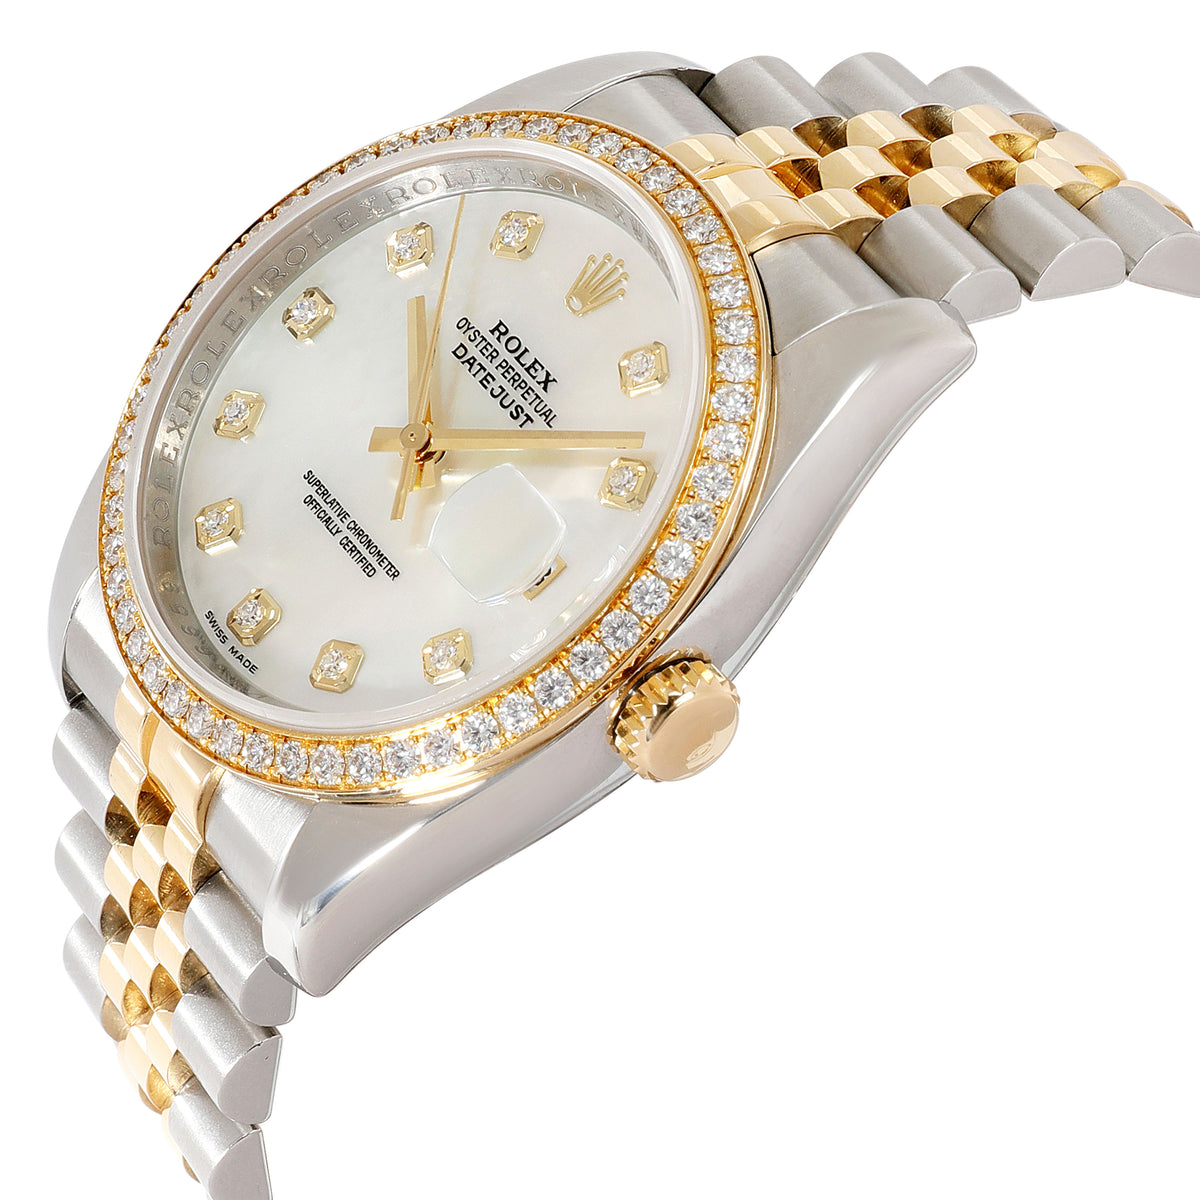 Rolex Datejust 116243 Men's Watch in 18kt Stainless Steel/Yellow Gold